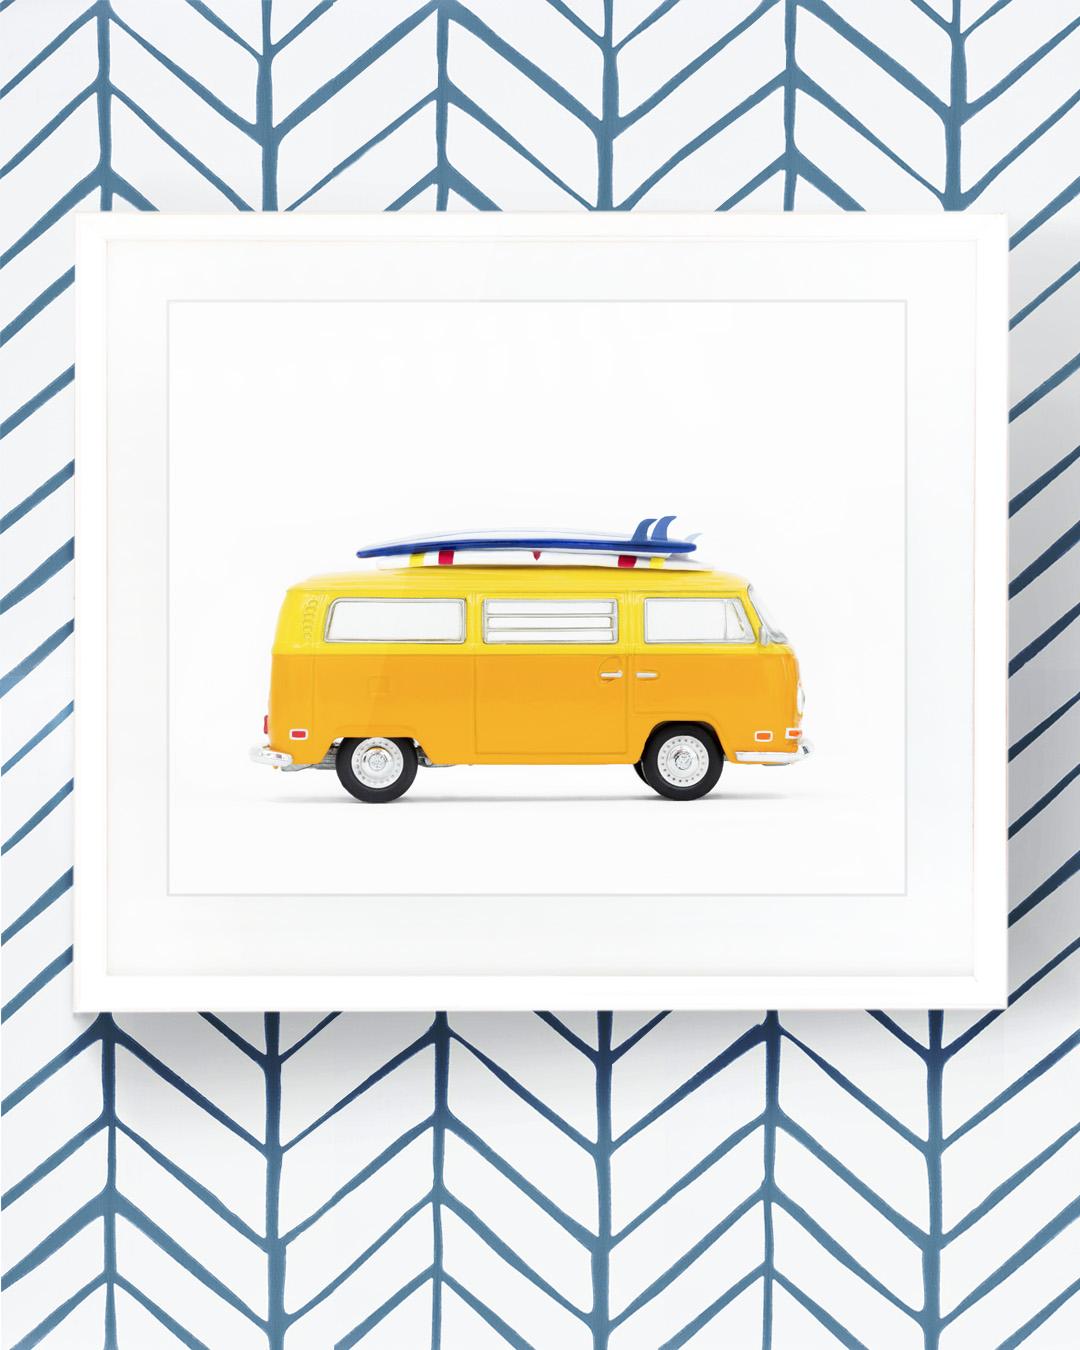 Car Series - Yellow Surf Van